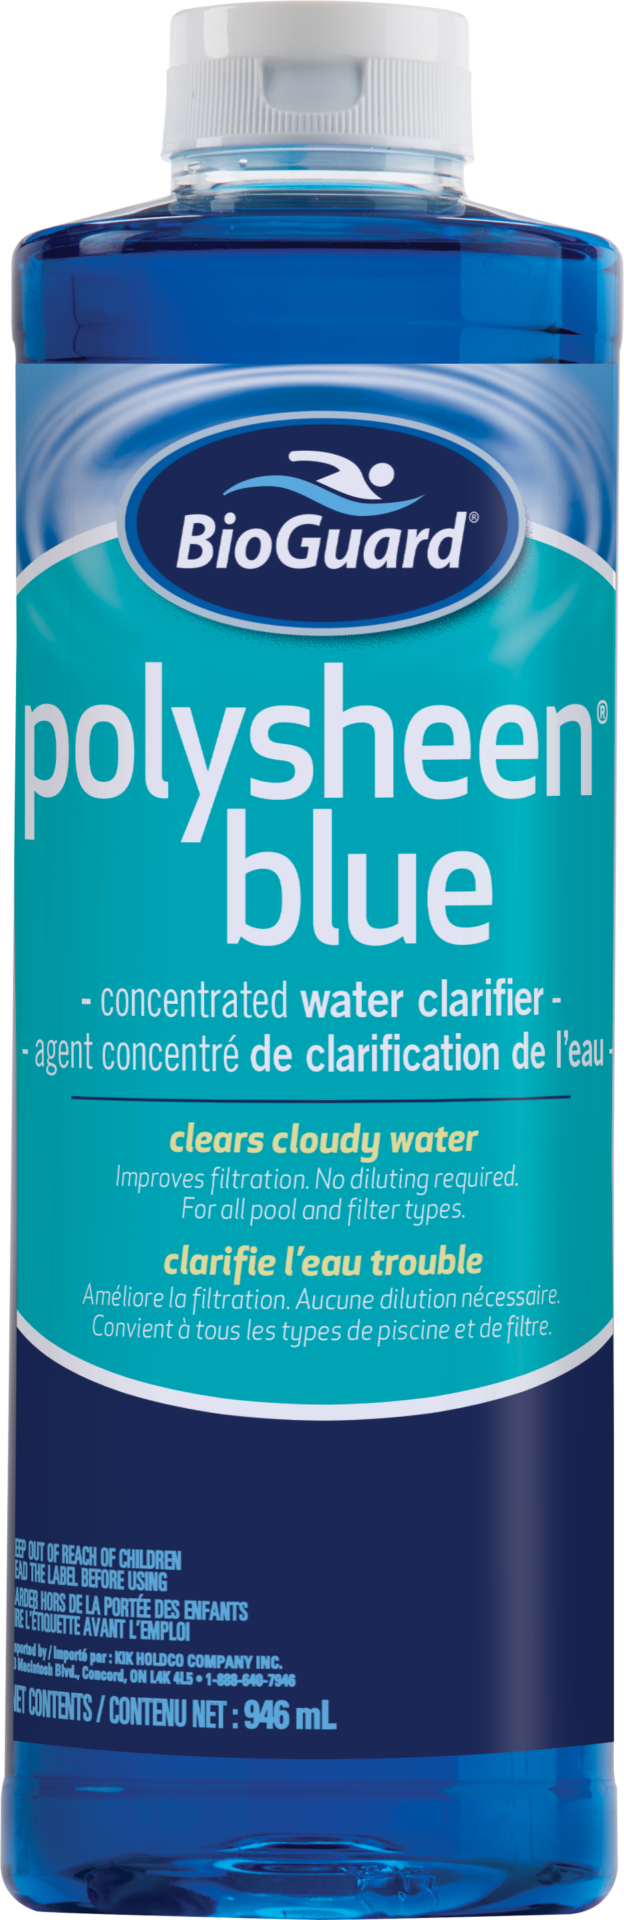 BioGuard Polysheen Blue 946ml - POLYSHEEN BLUE - 946ml